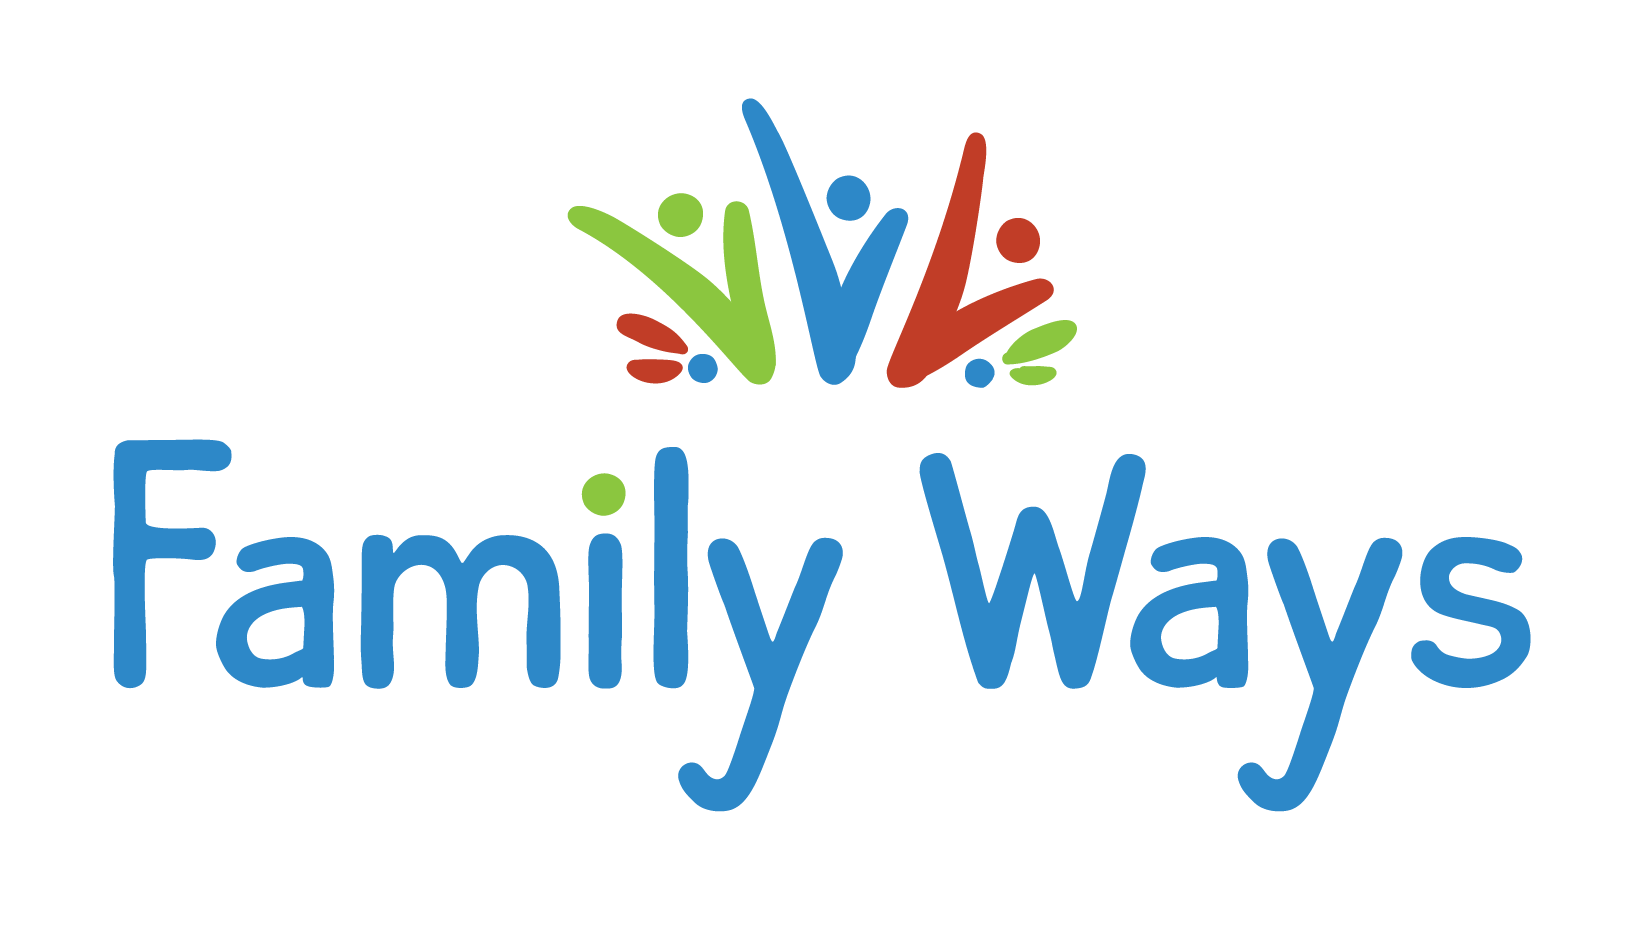 Family Ways program logo